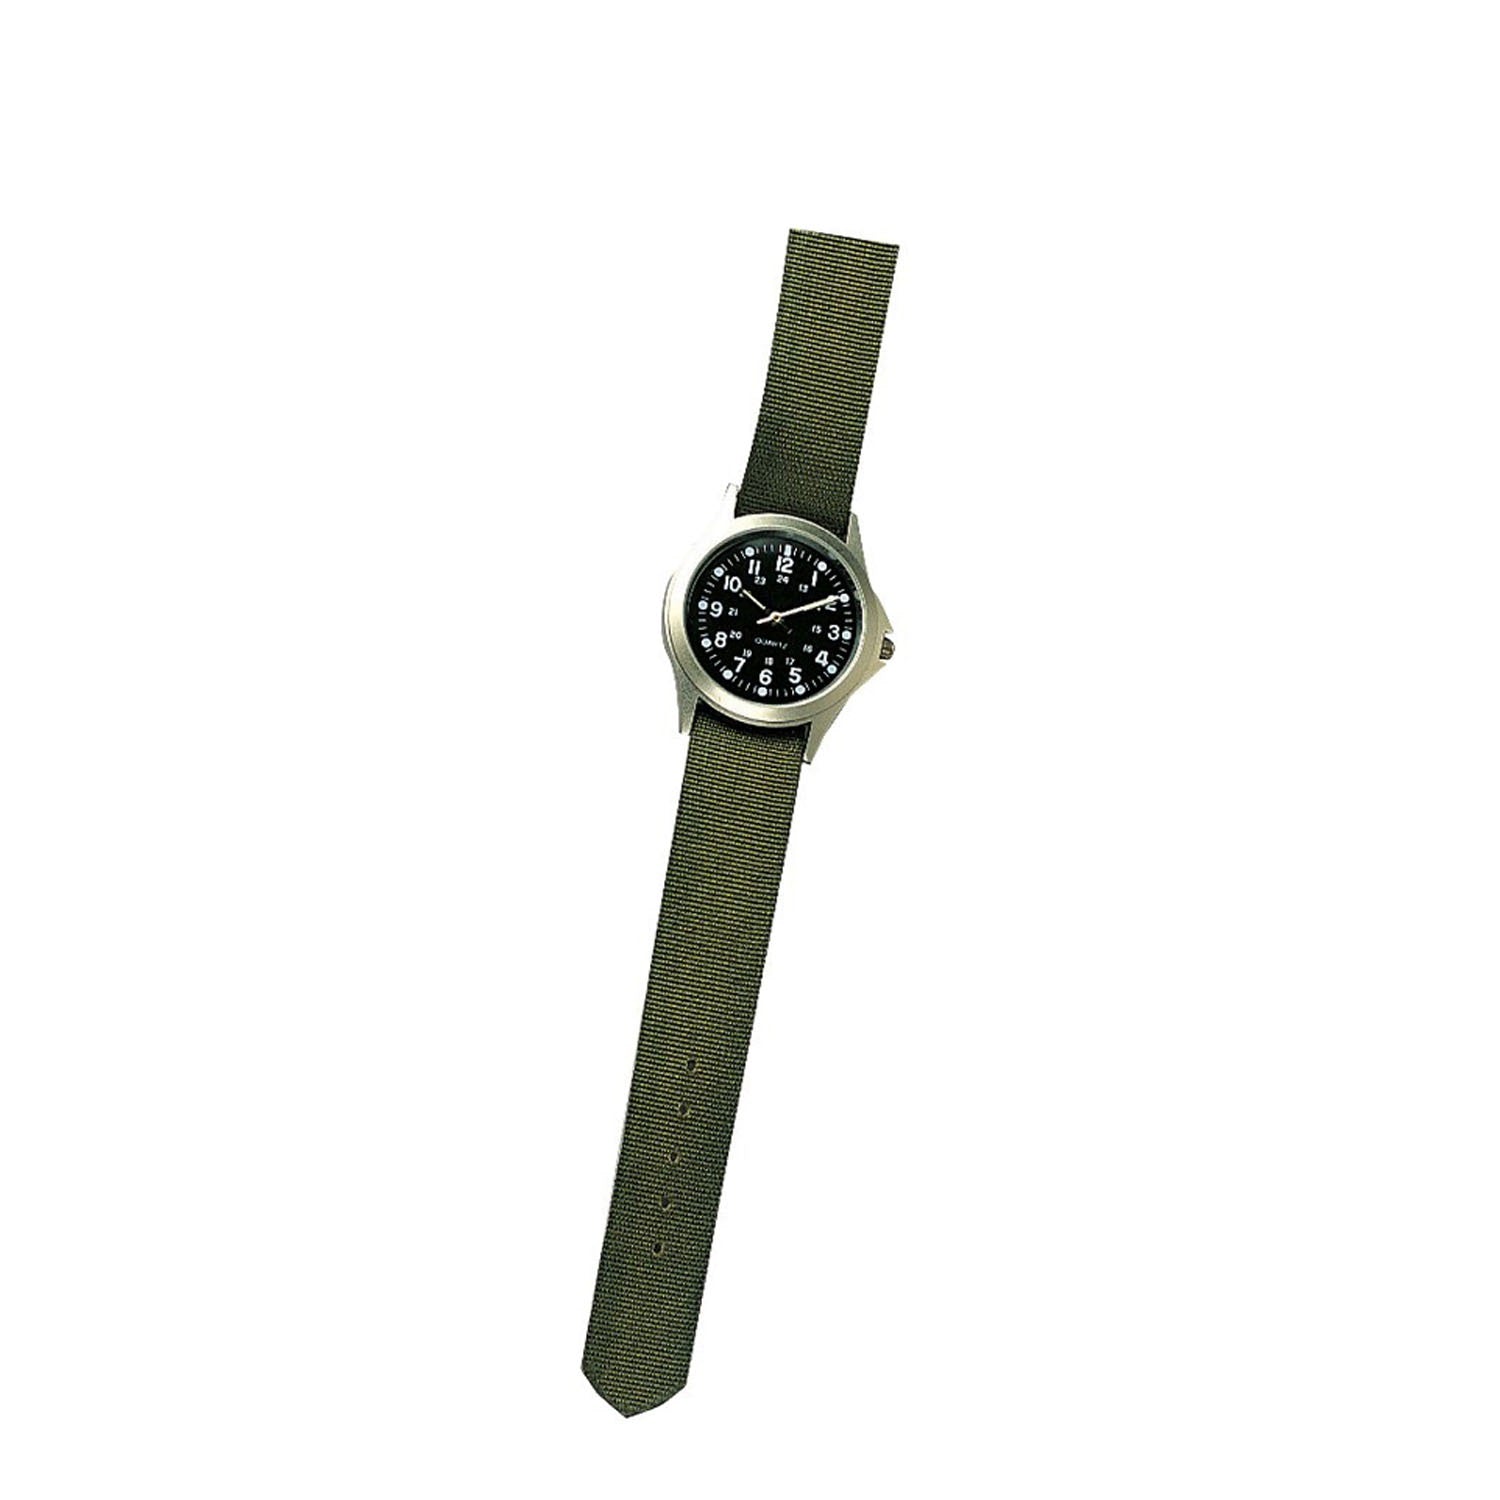 Rothco Military Style Quartz Watch Olive Drab